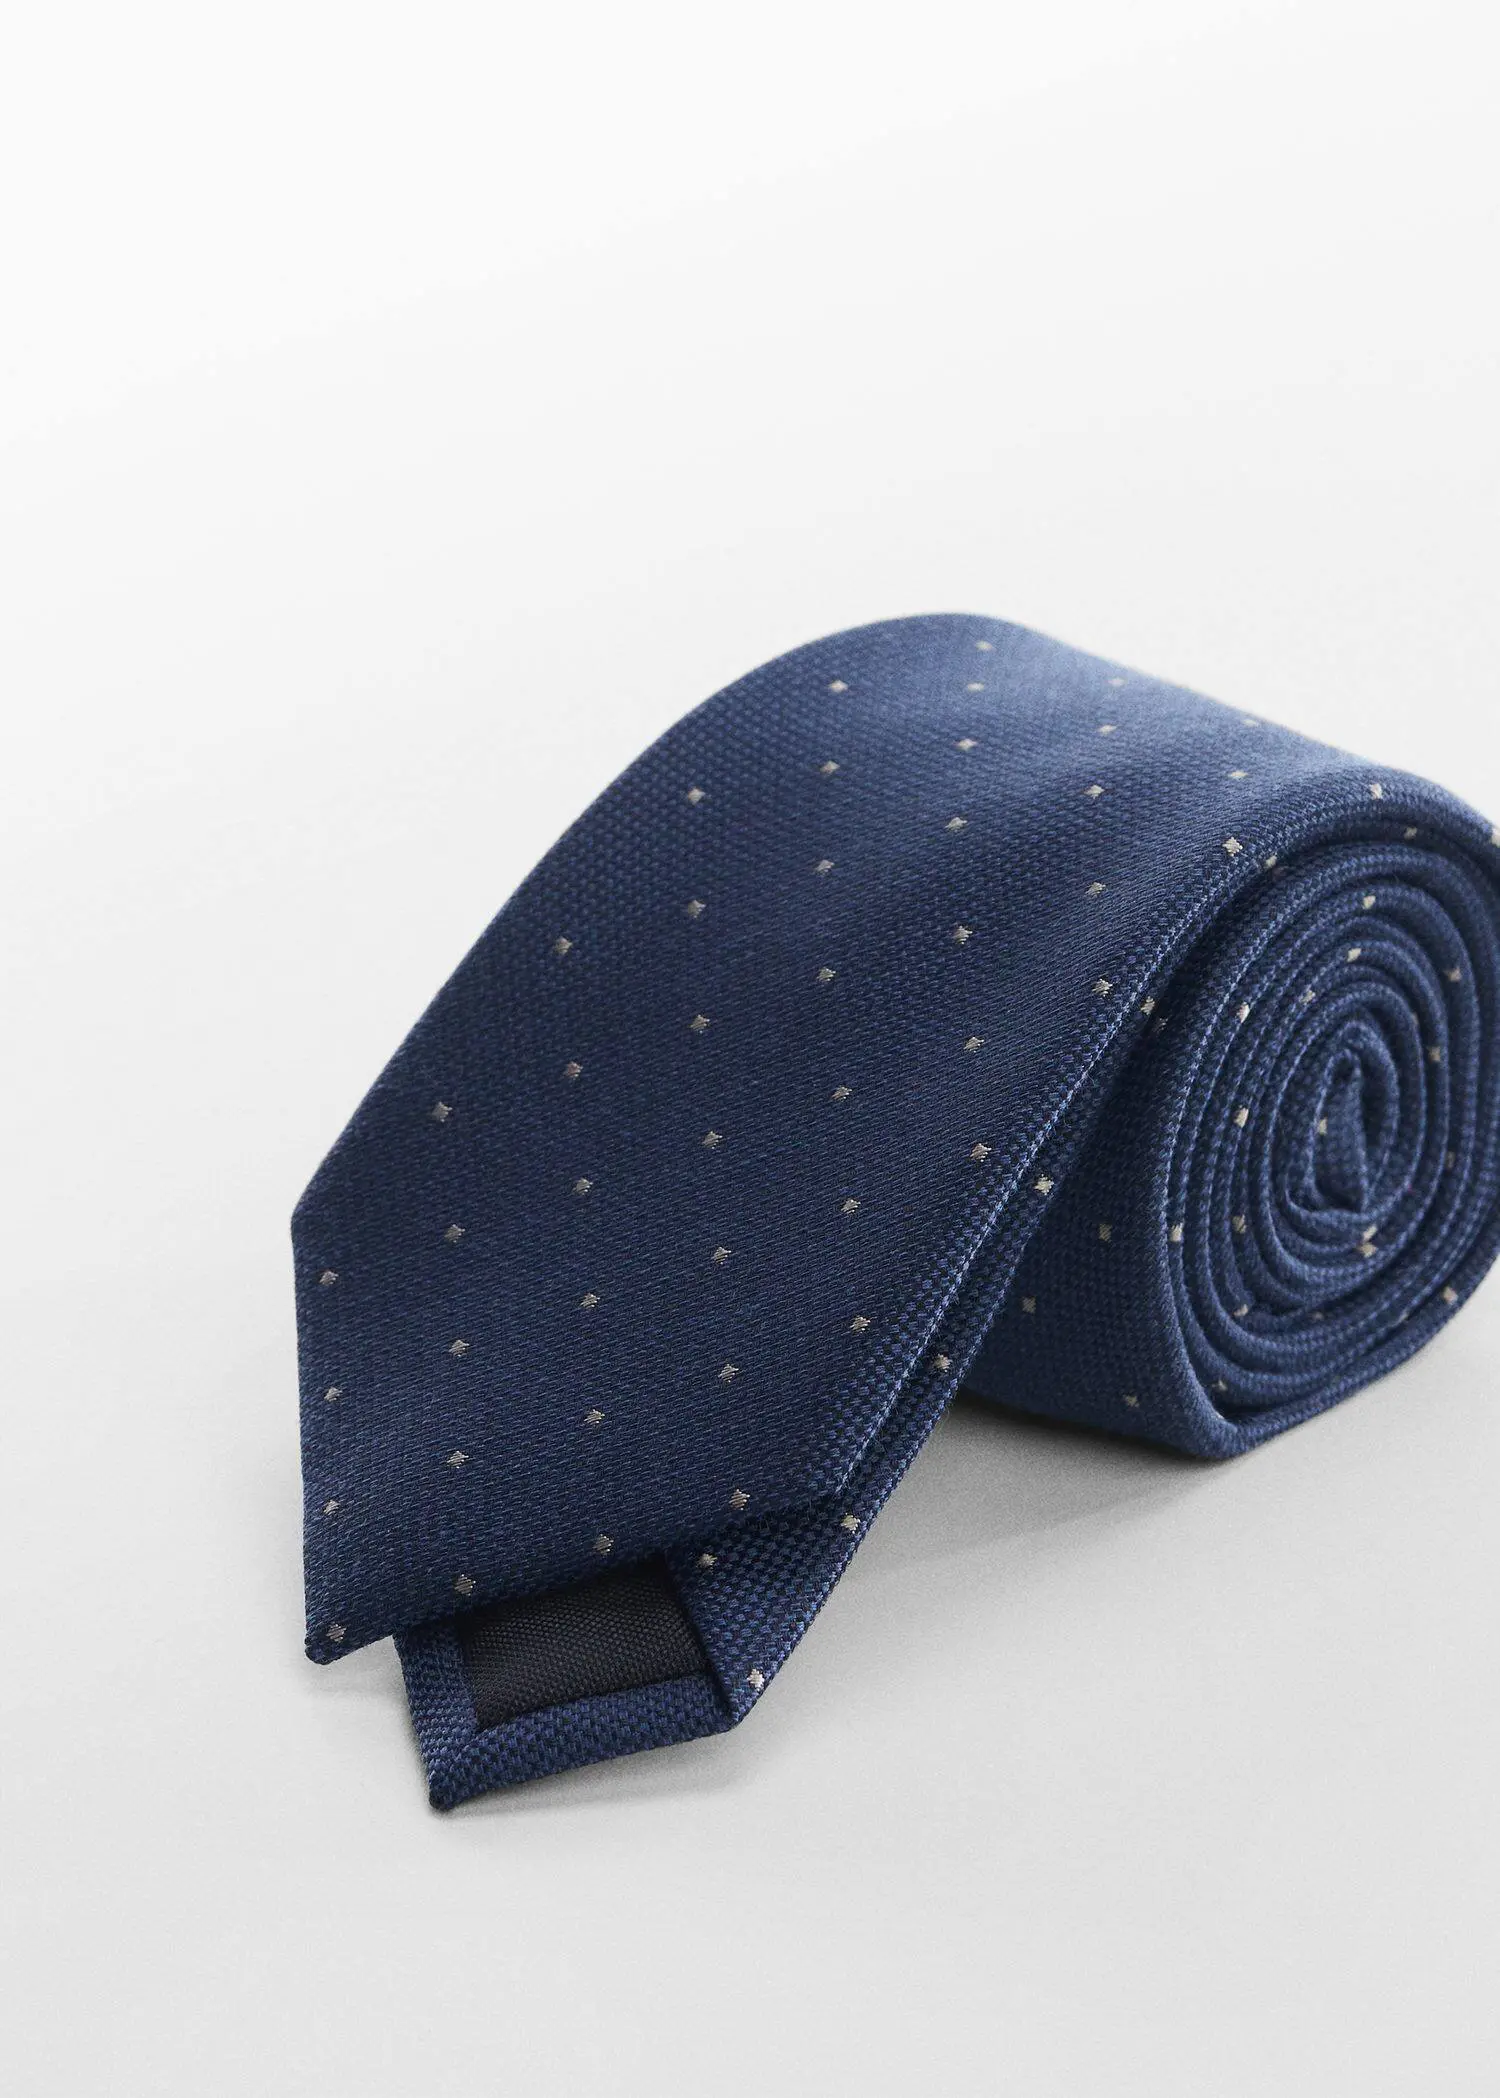 Mango Mikro puantiyeli biçimli kravat. 2